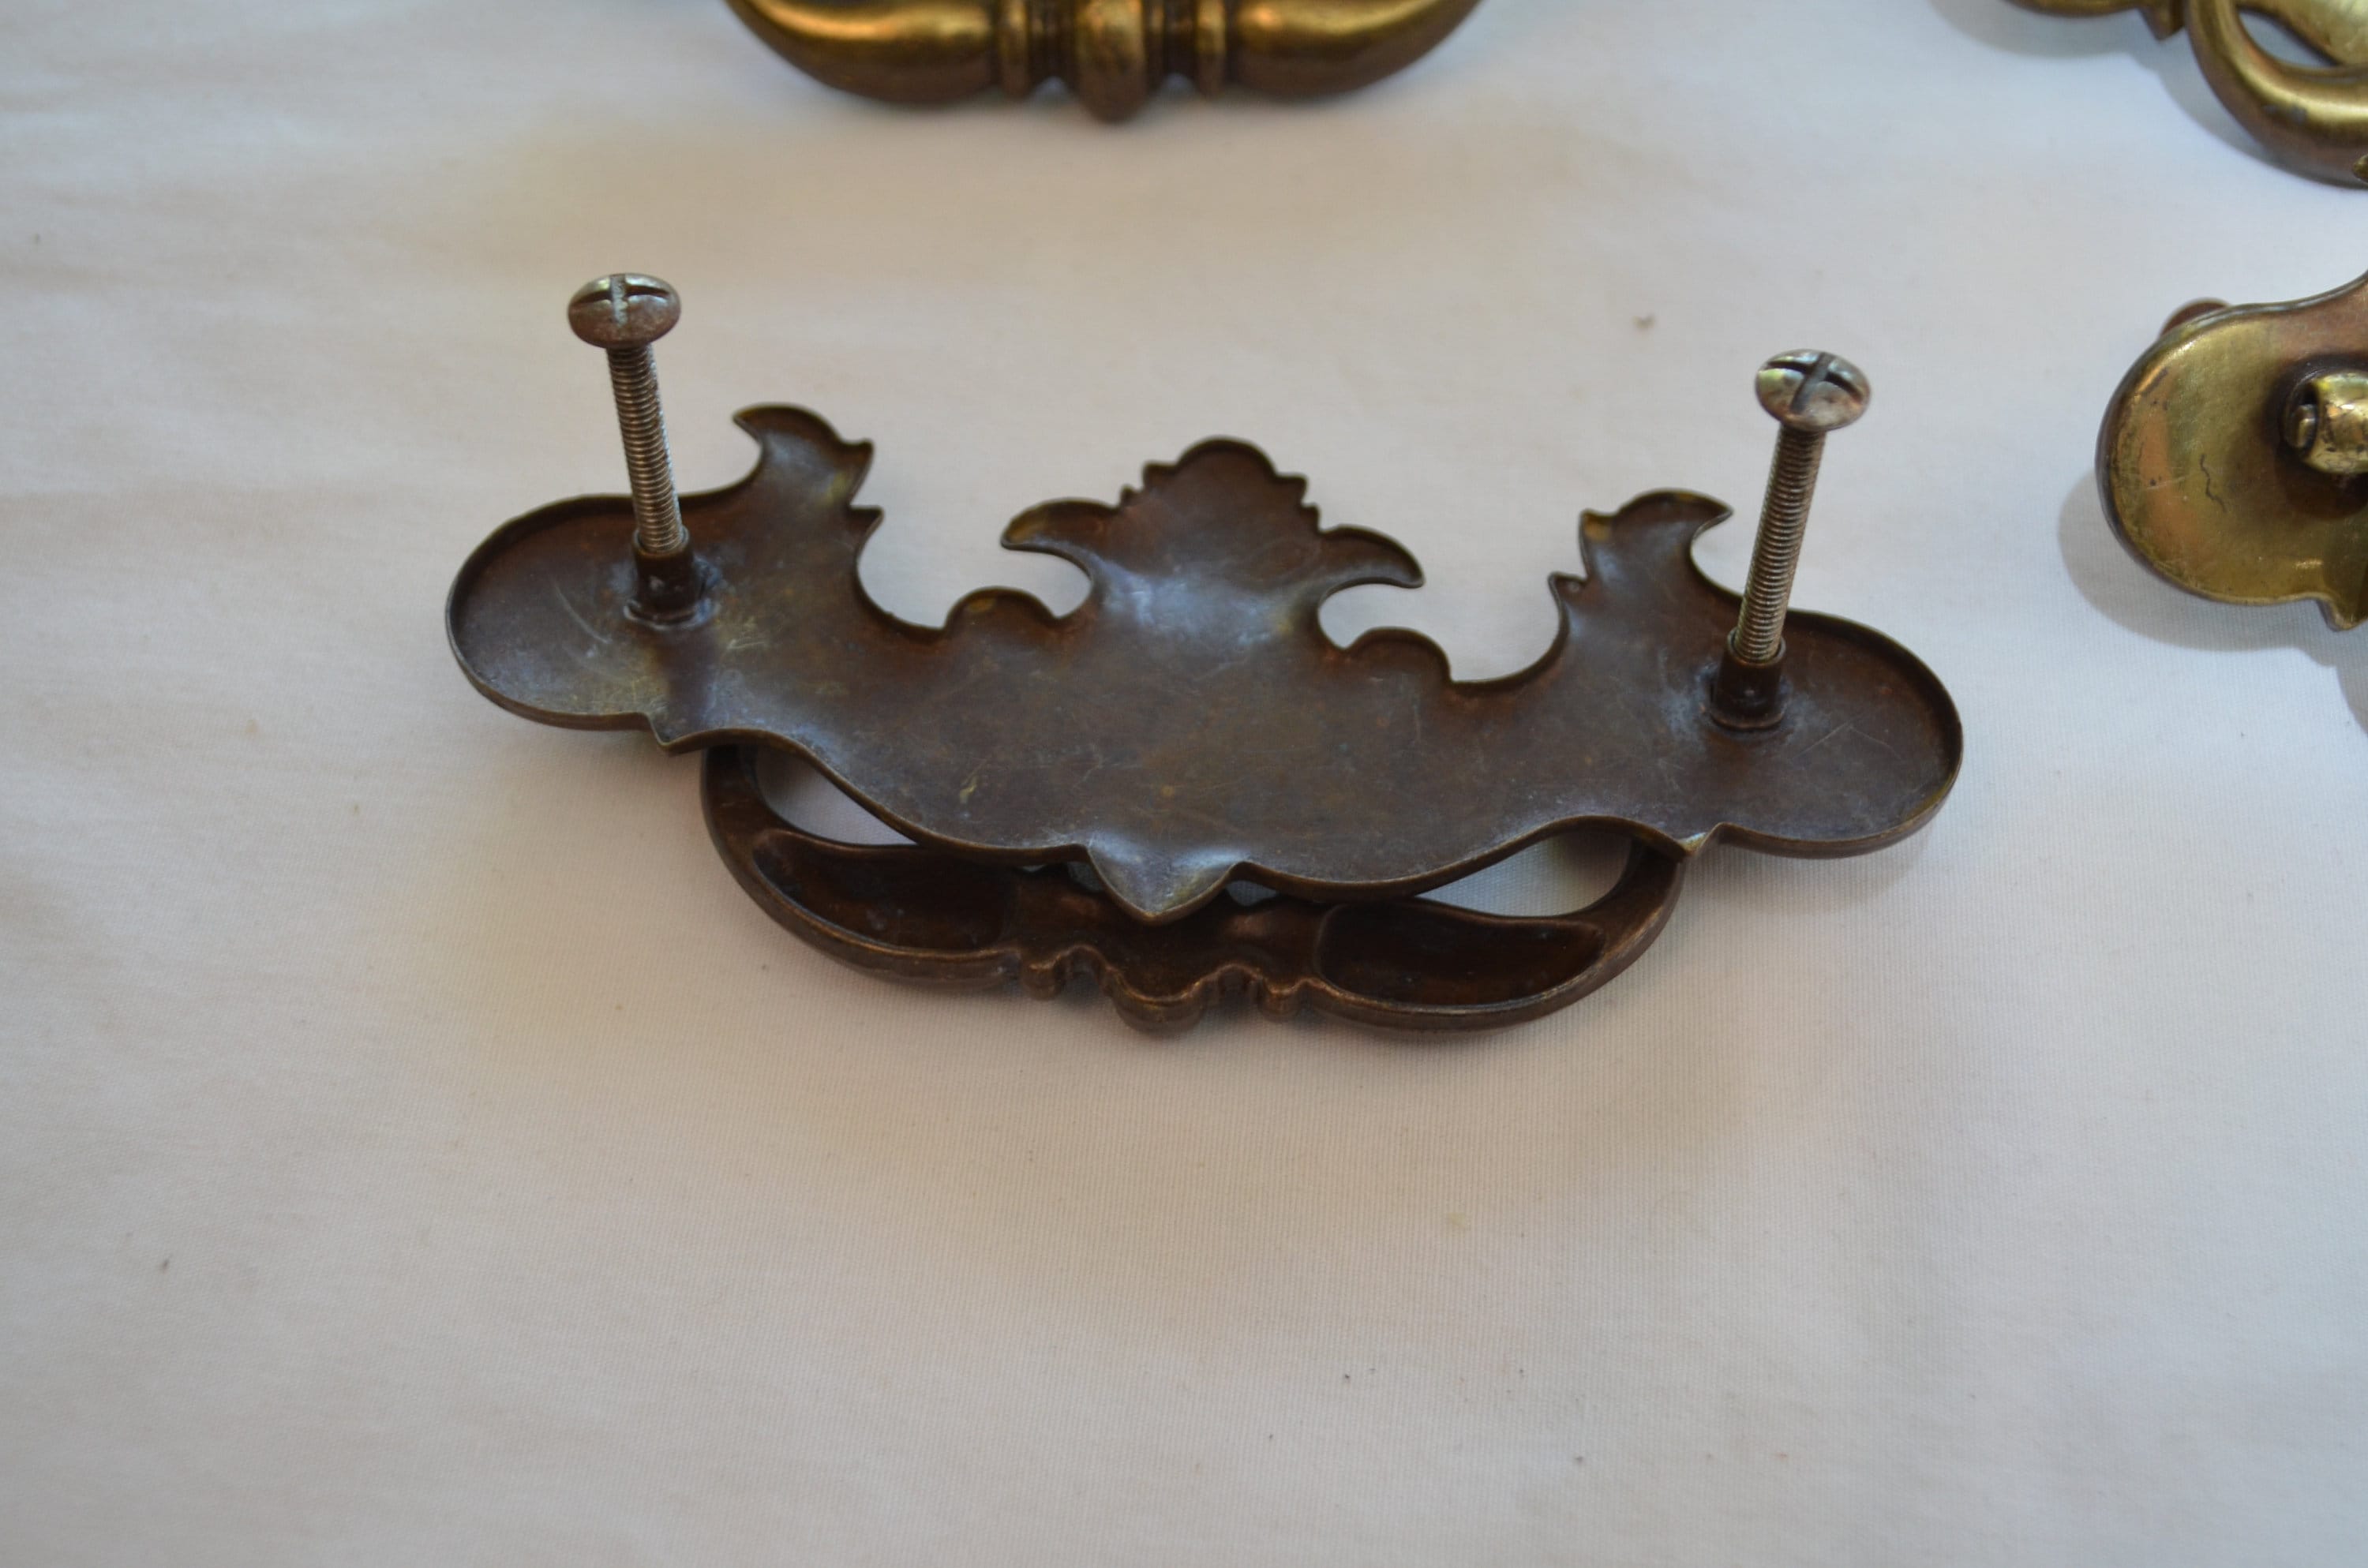 Goo-Ki Paquete de 6 tiradores de latón antiguo para cajones de gabinete,  agujero de 12.6 pulgadas, aleación de zinc maciza, barra de bronce vintage